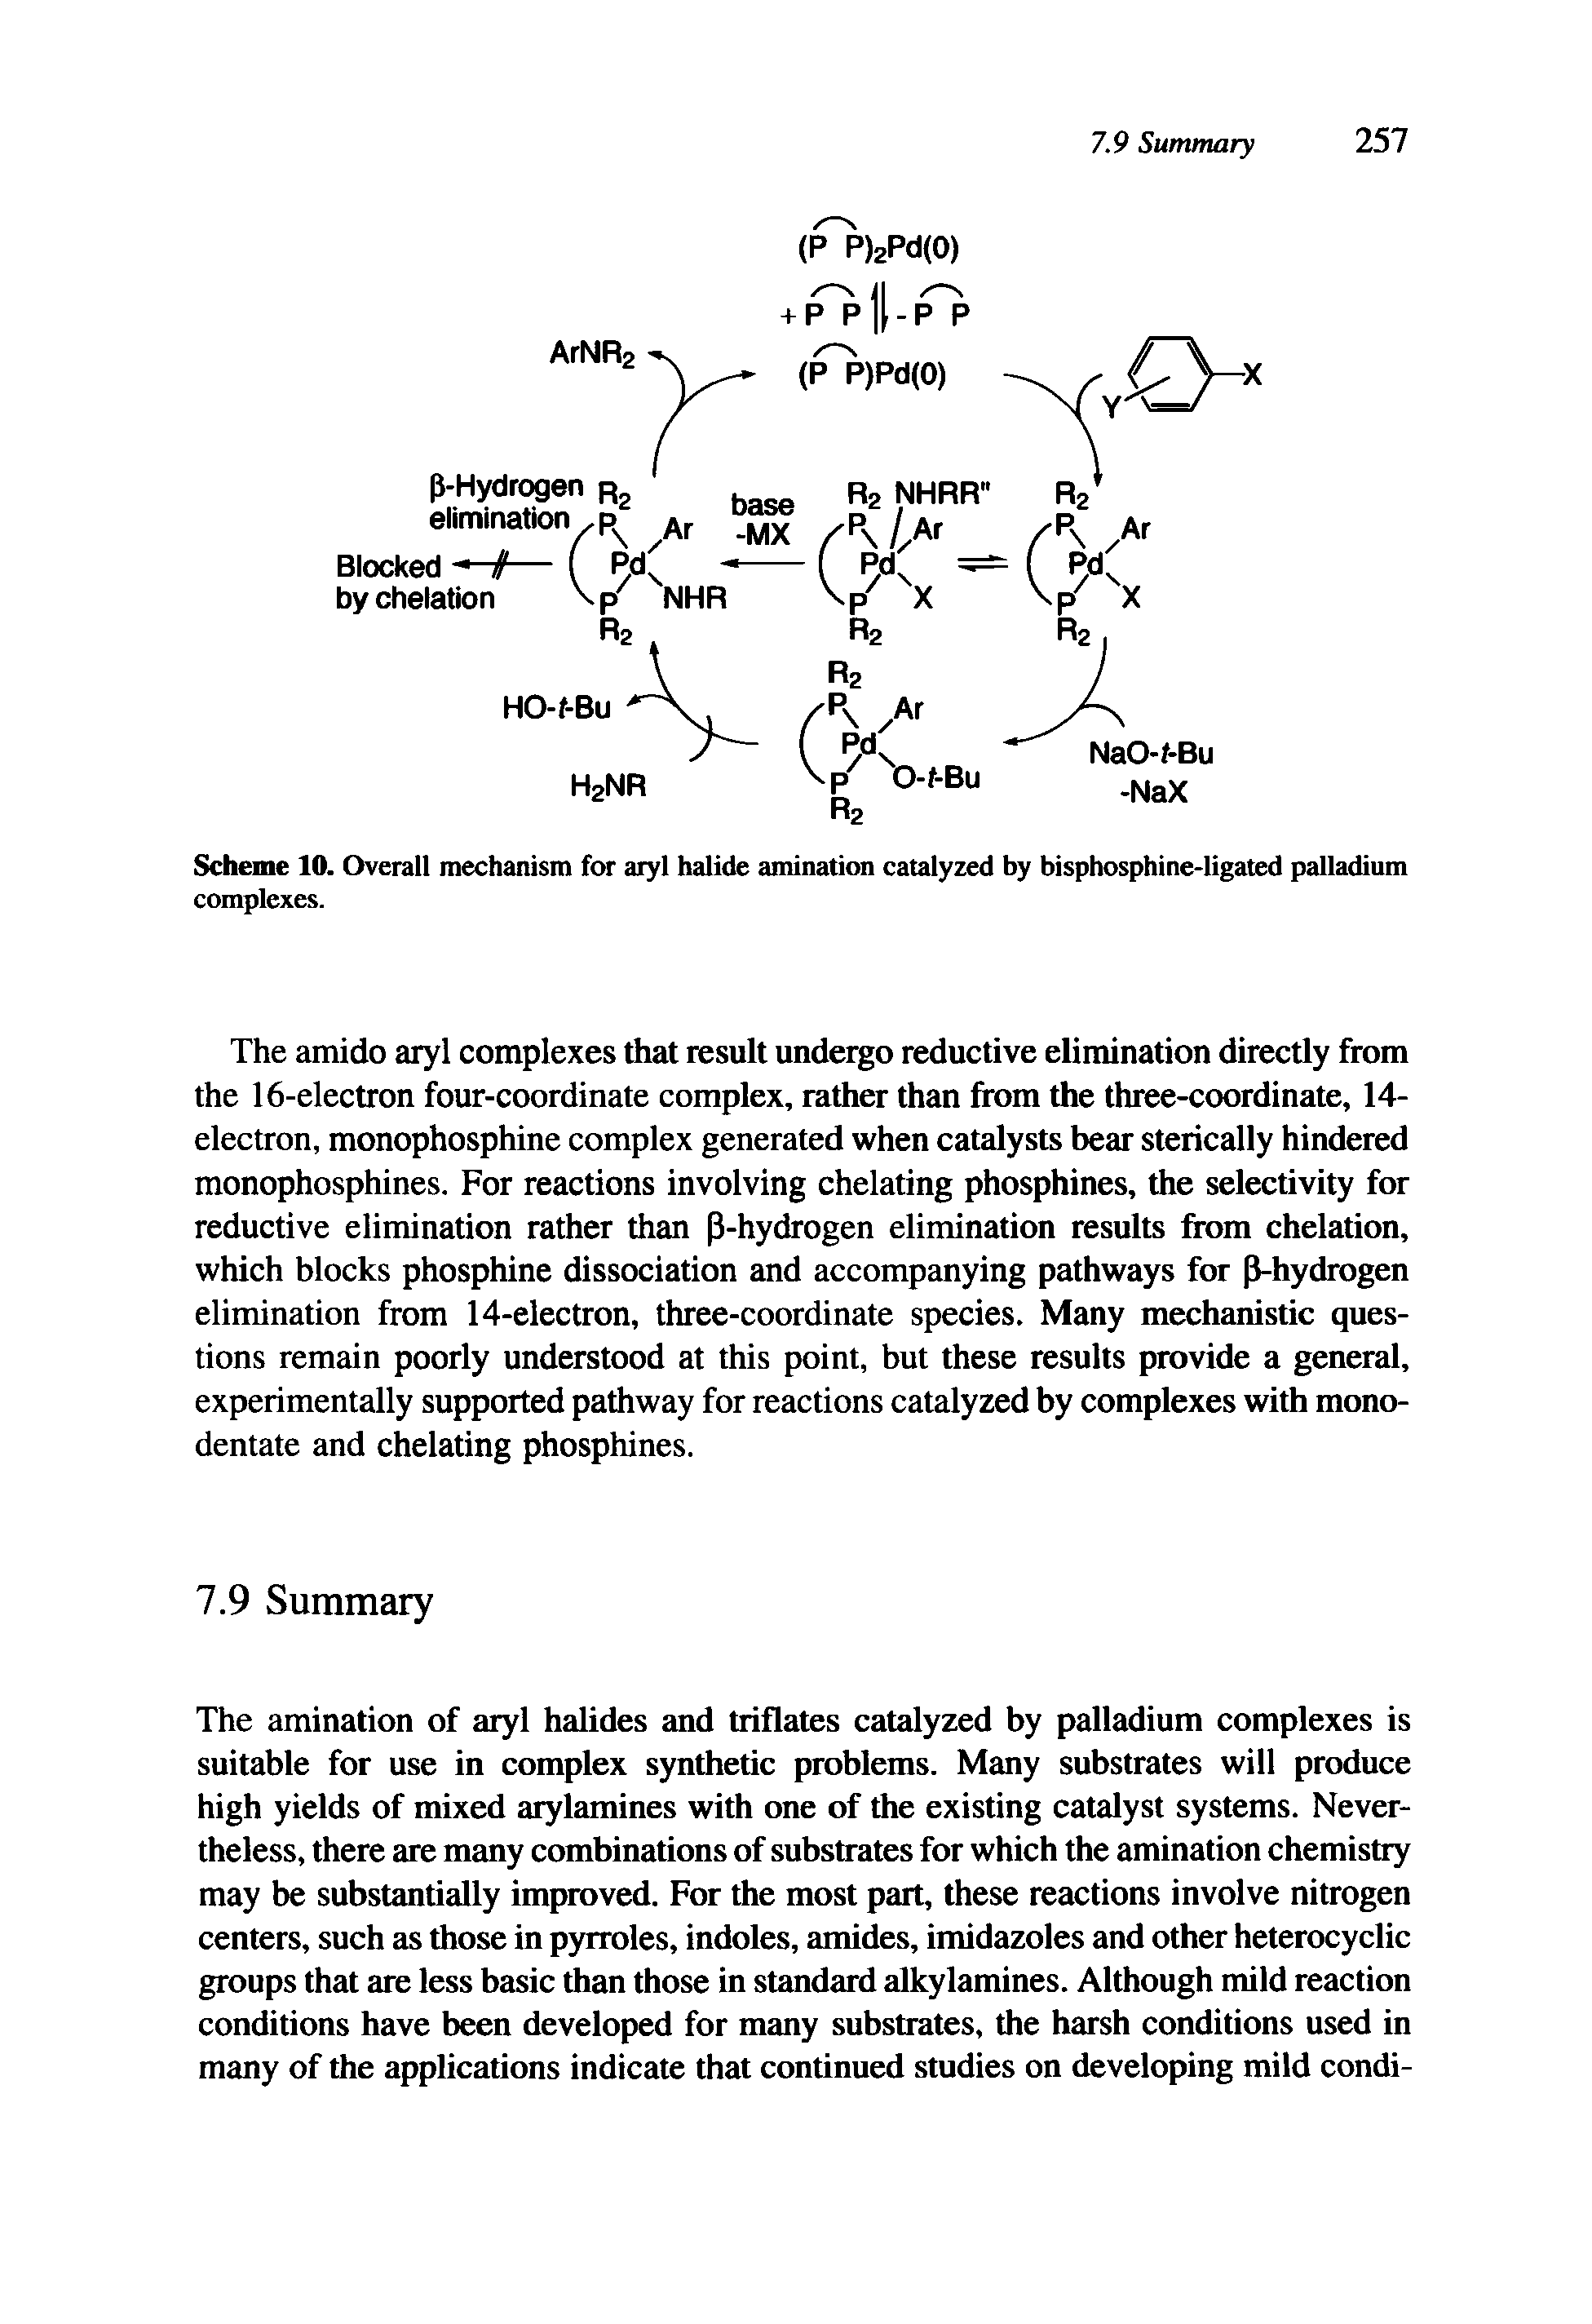 Scheme 10. Overall mechanism for aryl halide amination catalyzed by bisphosphine-ligated palladium complexes.